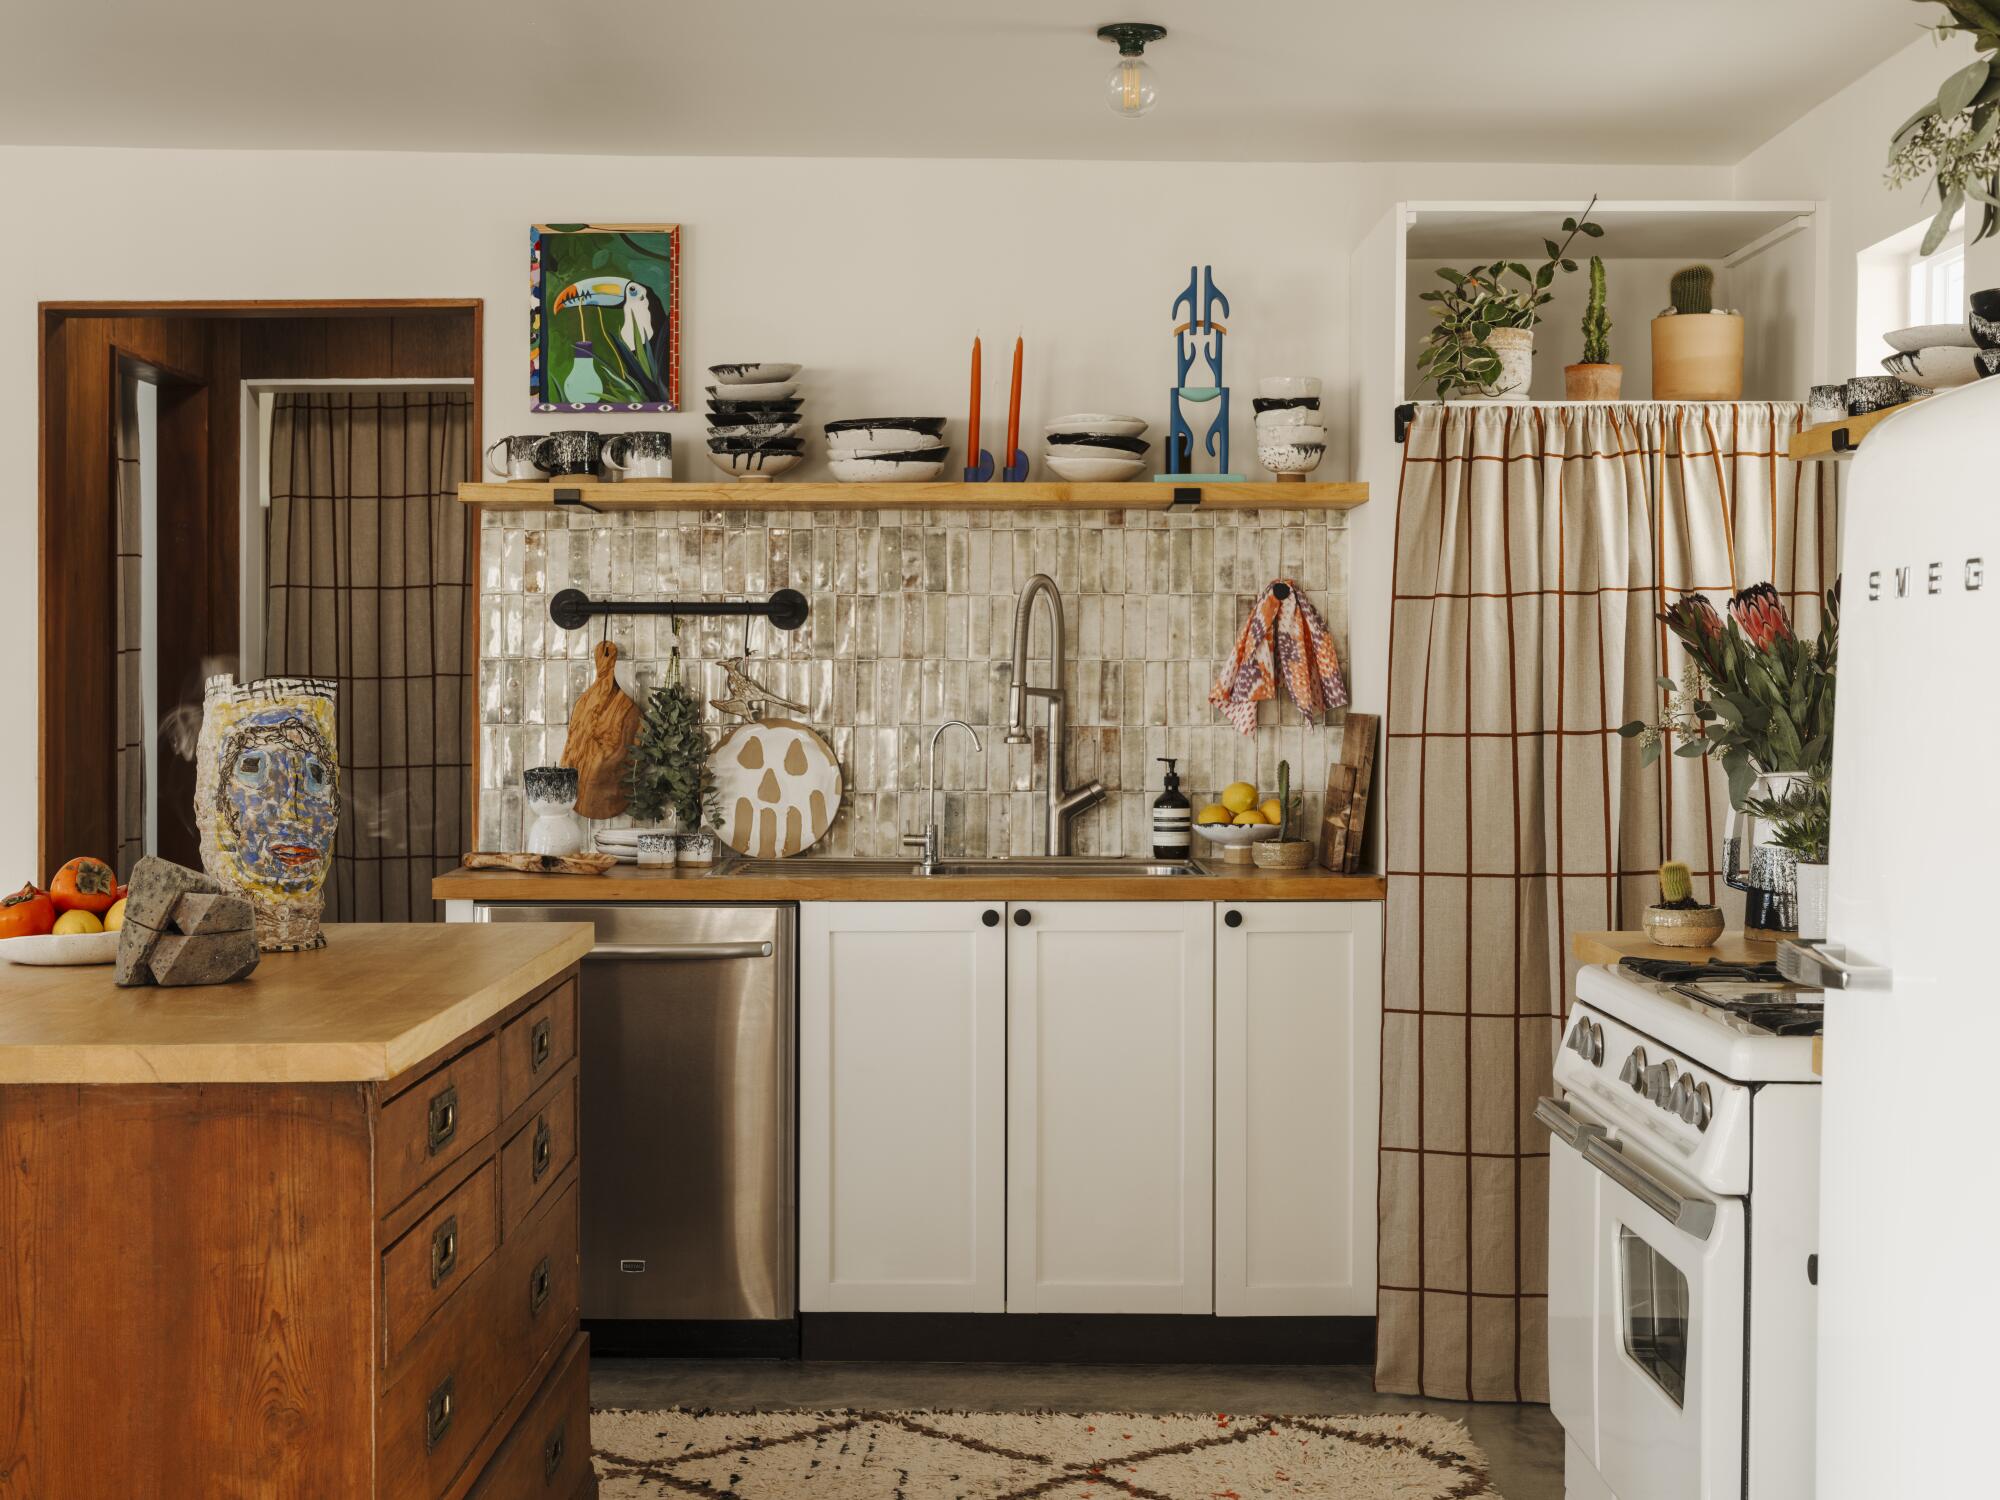 A kitchen with a walnut island and white ceramic backsplash.